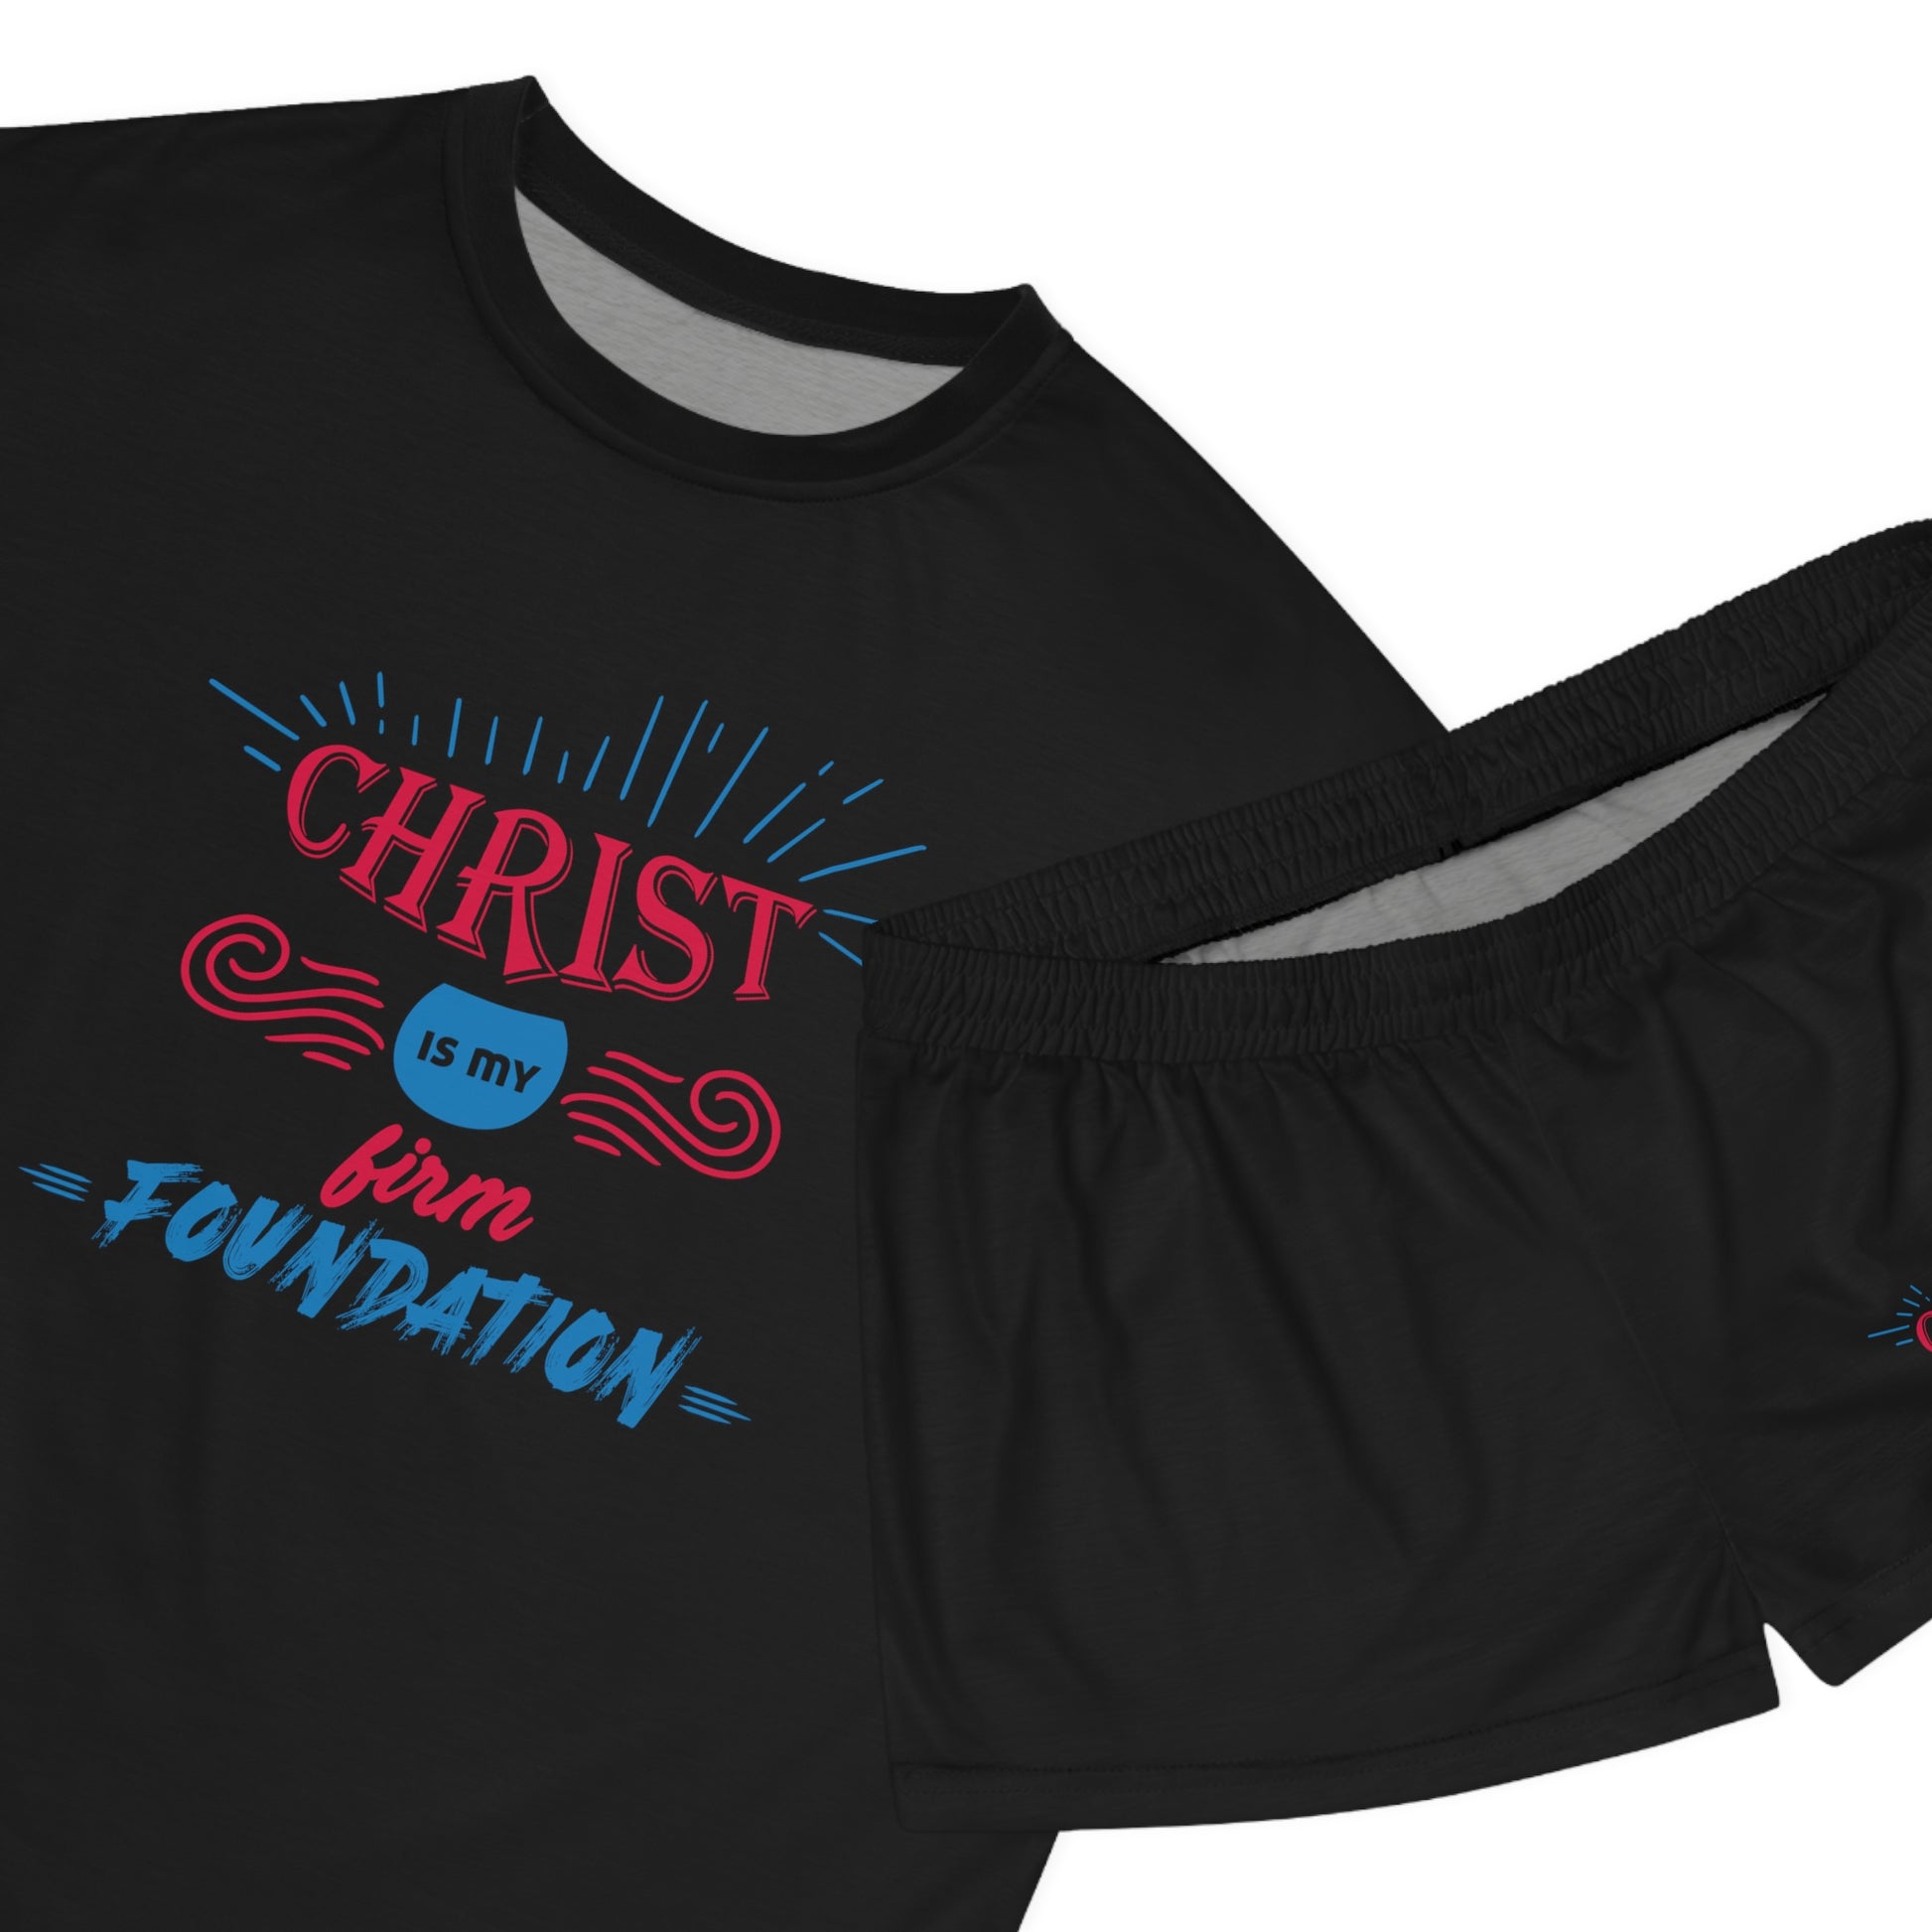 Christ Is My Firm Foundation Women's Christian Short Pajama Set Printify